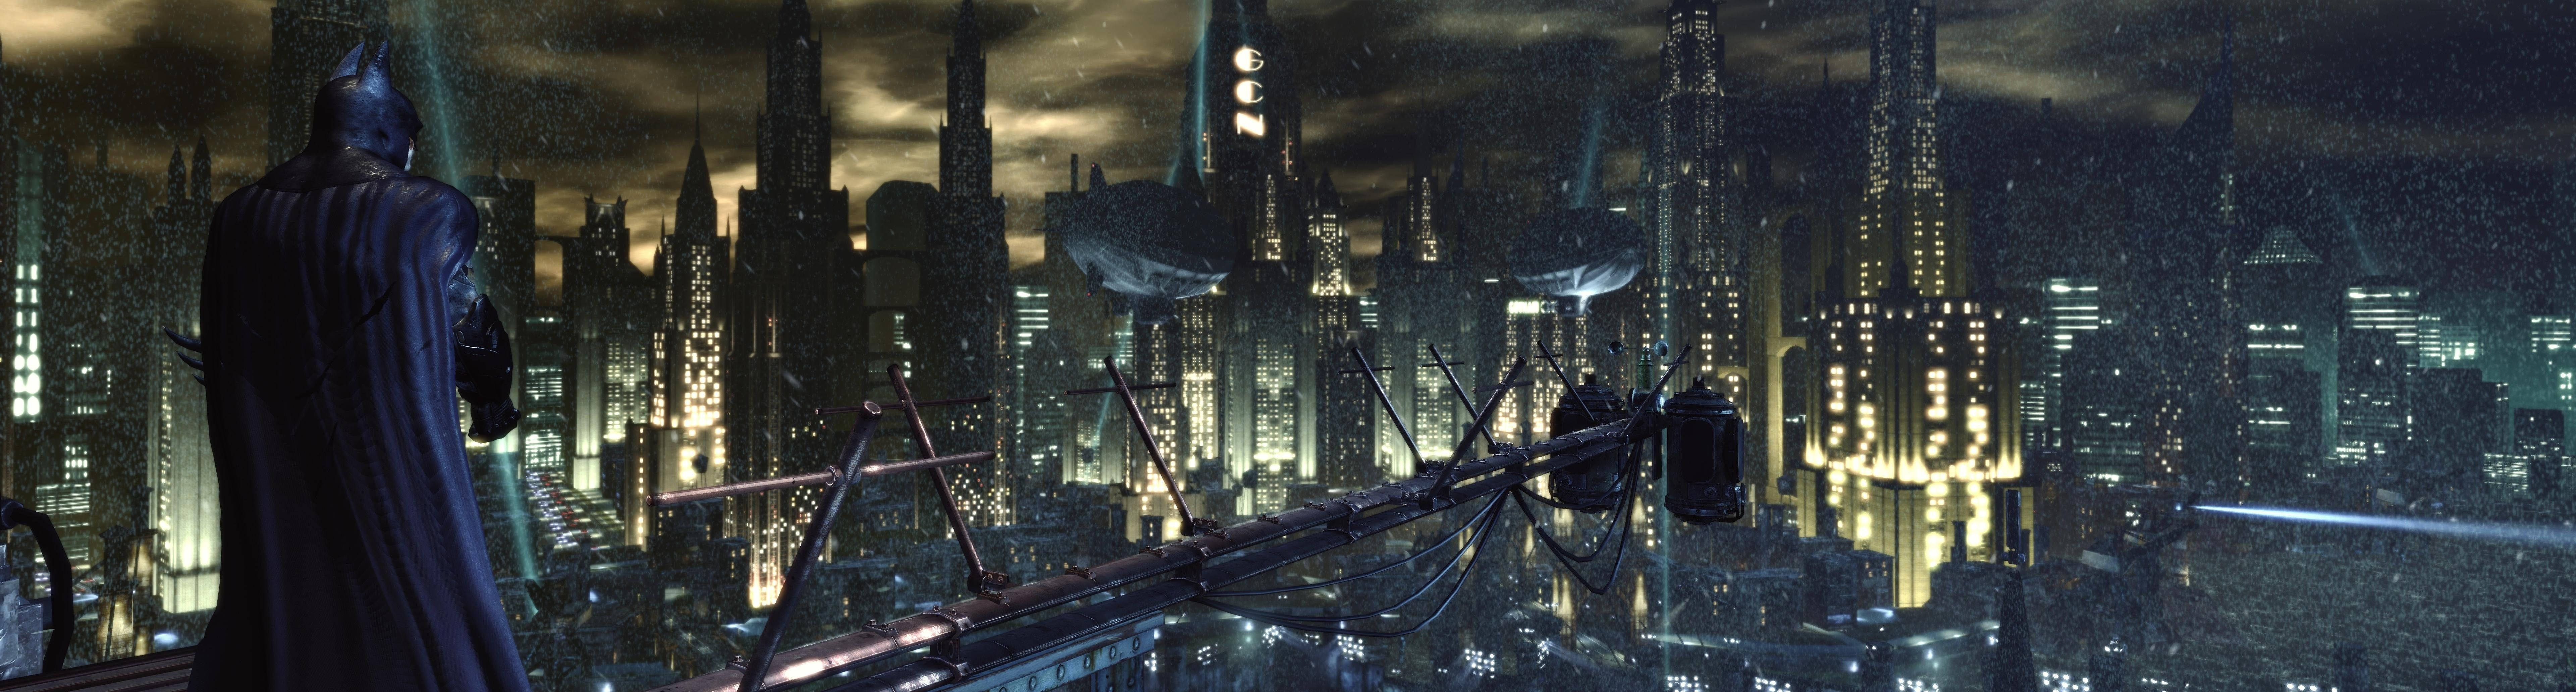 Download 4K Dual Monitor Batman Overlooking Gotham City Wallpaper